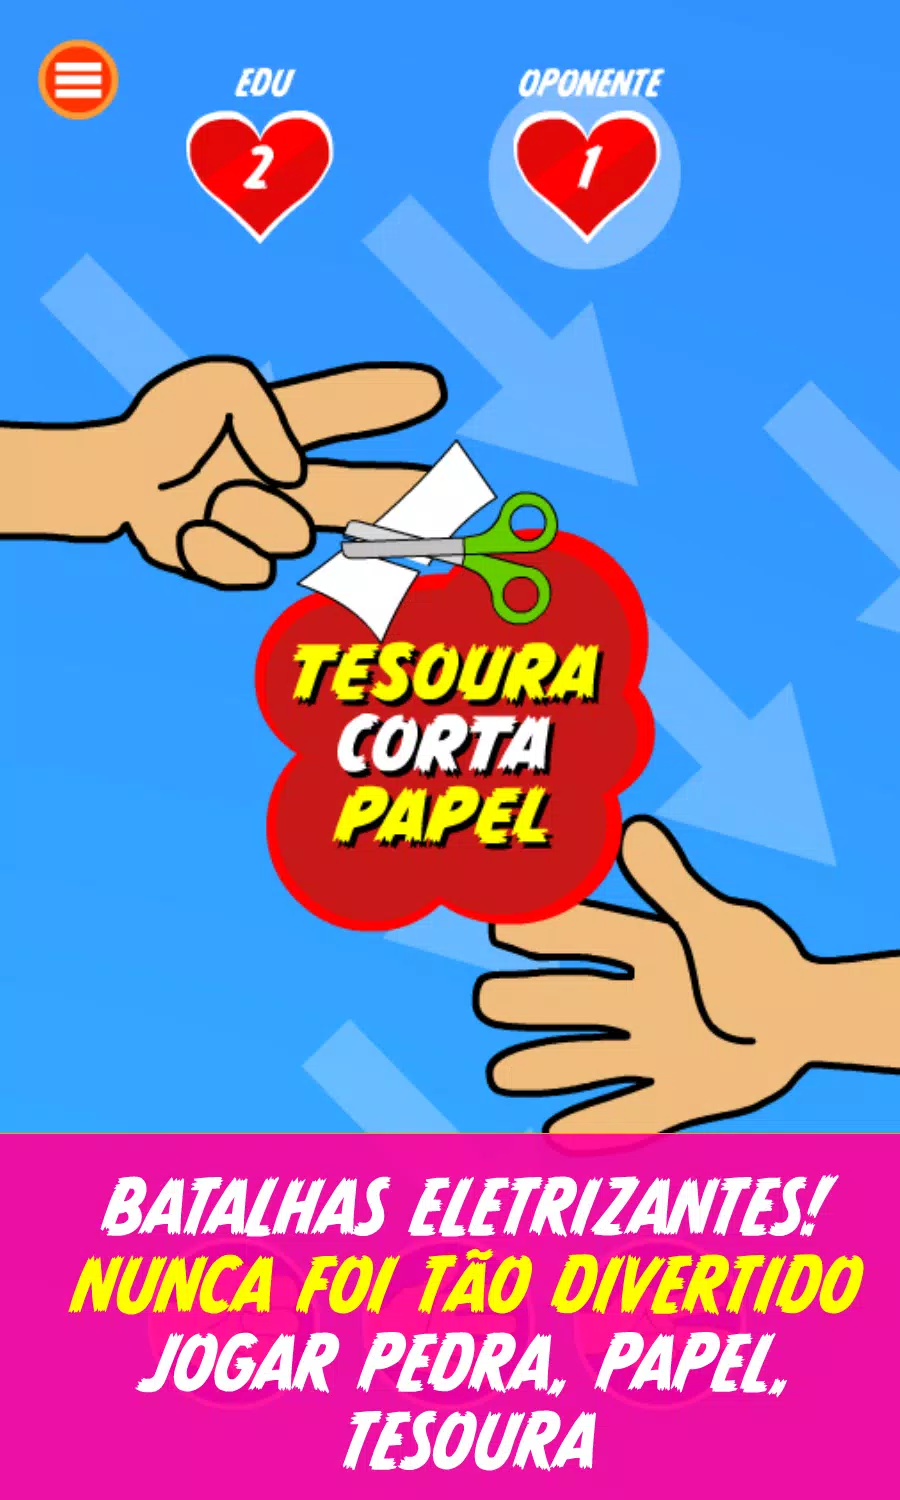 Joquempô Pedra, Papel, Tesoura APK for Android Download